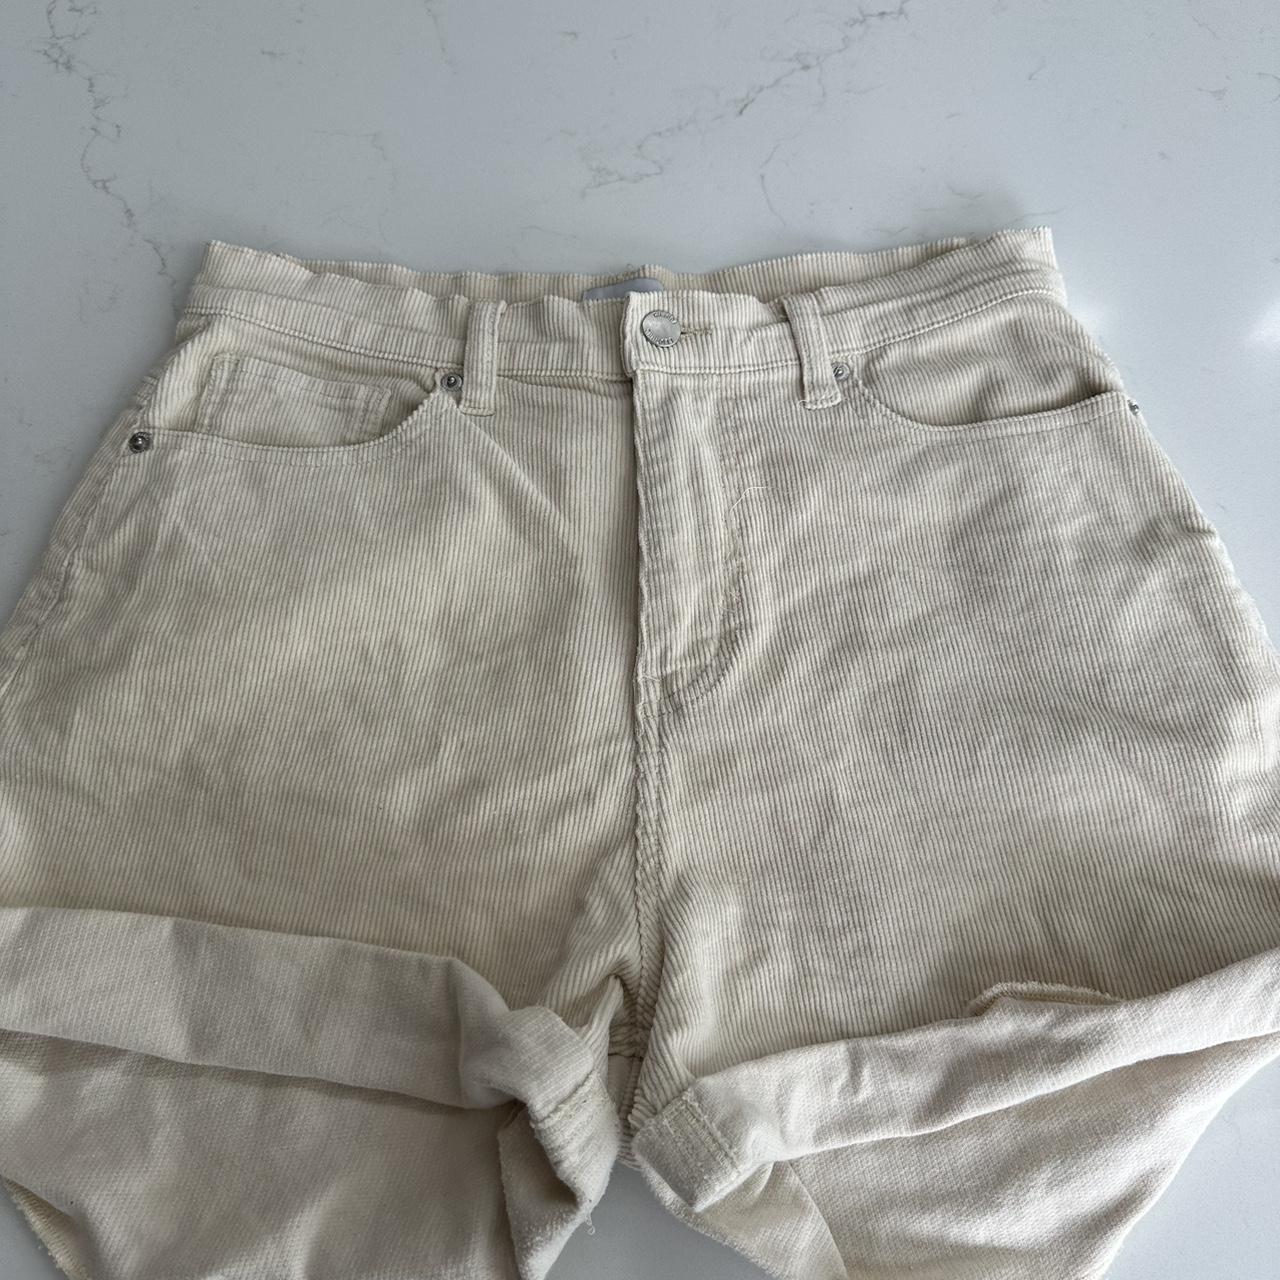 Ghanda corduroy shorts - Depop